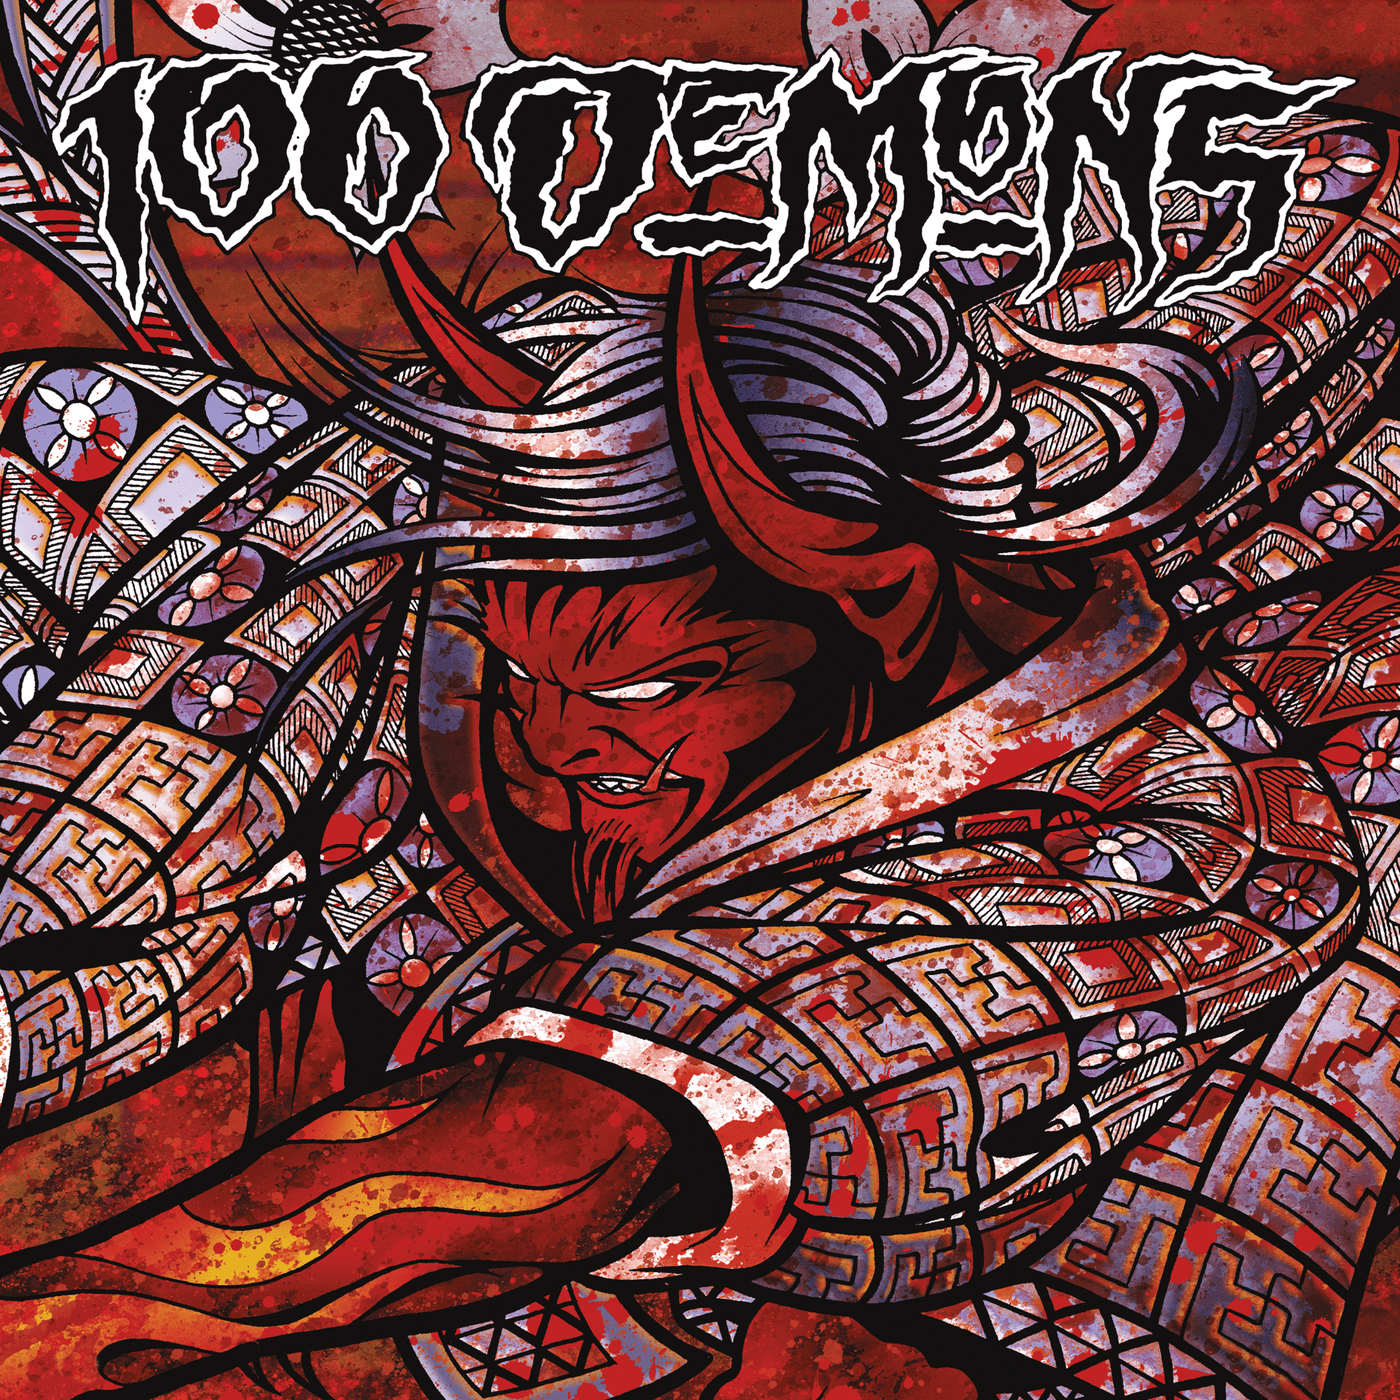 100 Demons "Self Titled"